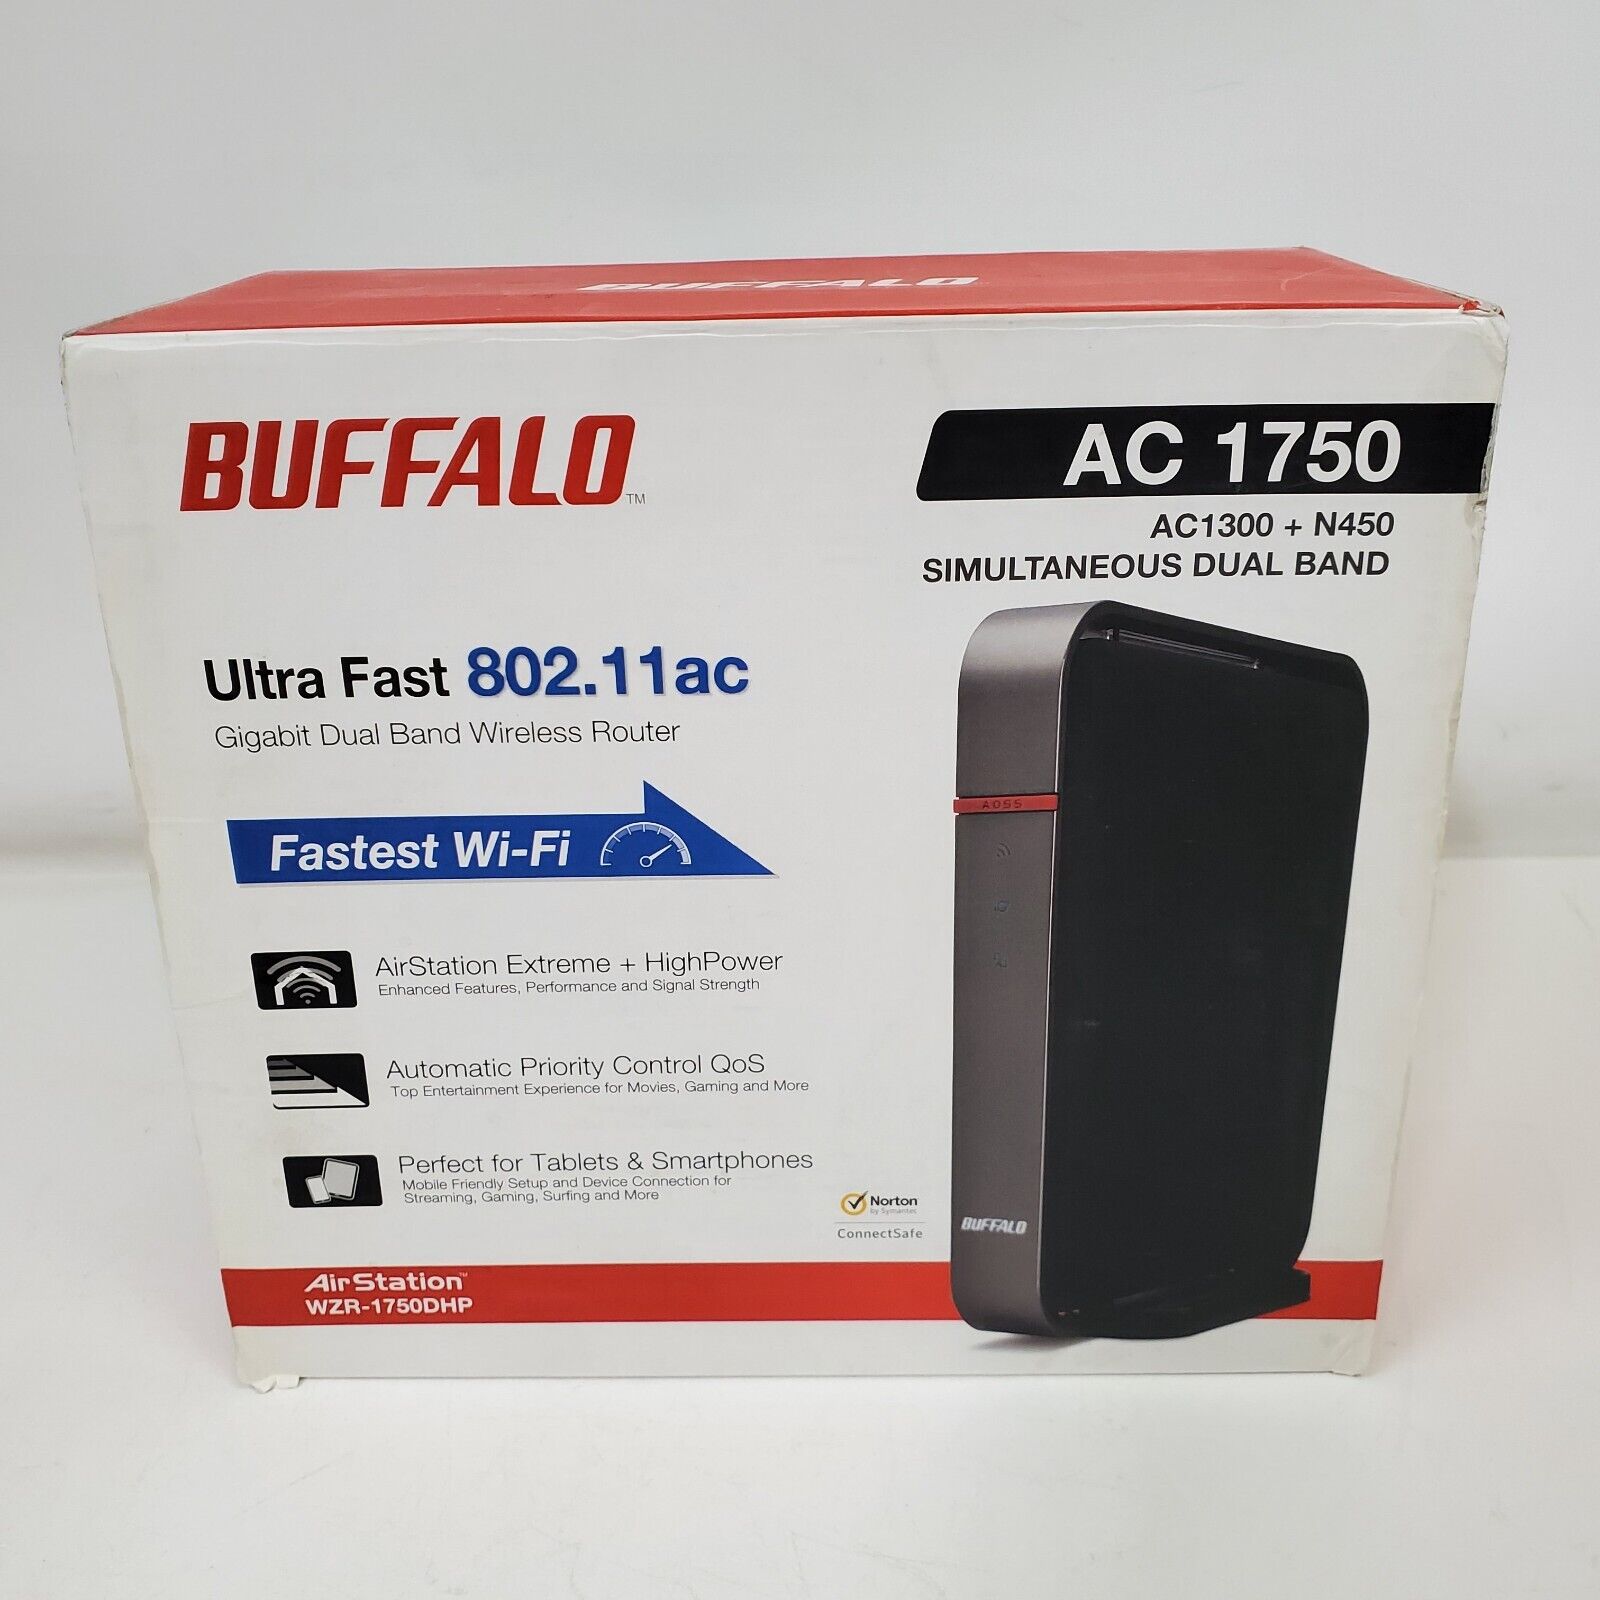 Buffalo AirStation WZR-1750DHP AC 1750 Gigabit Dual Band Wireless Router